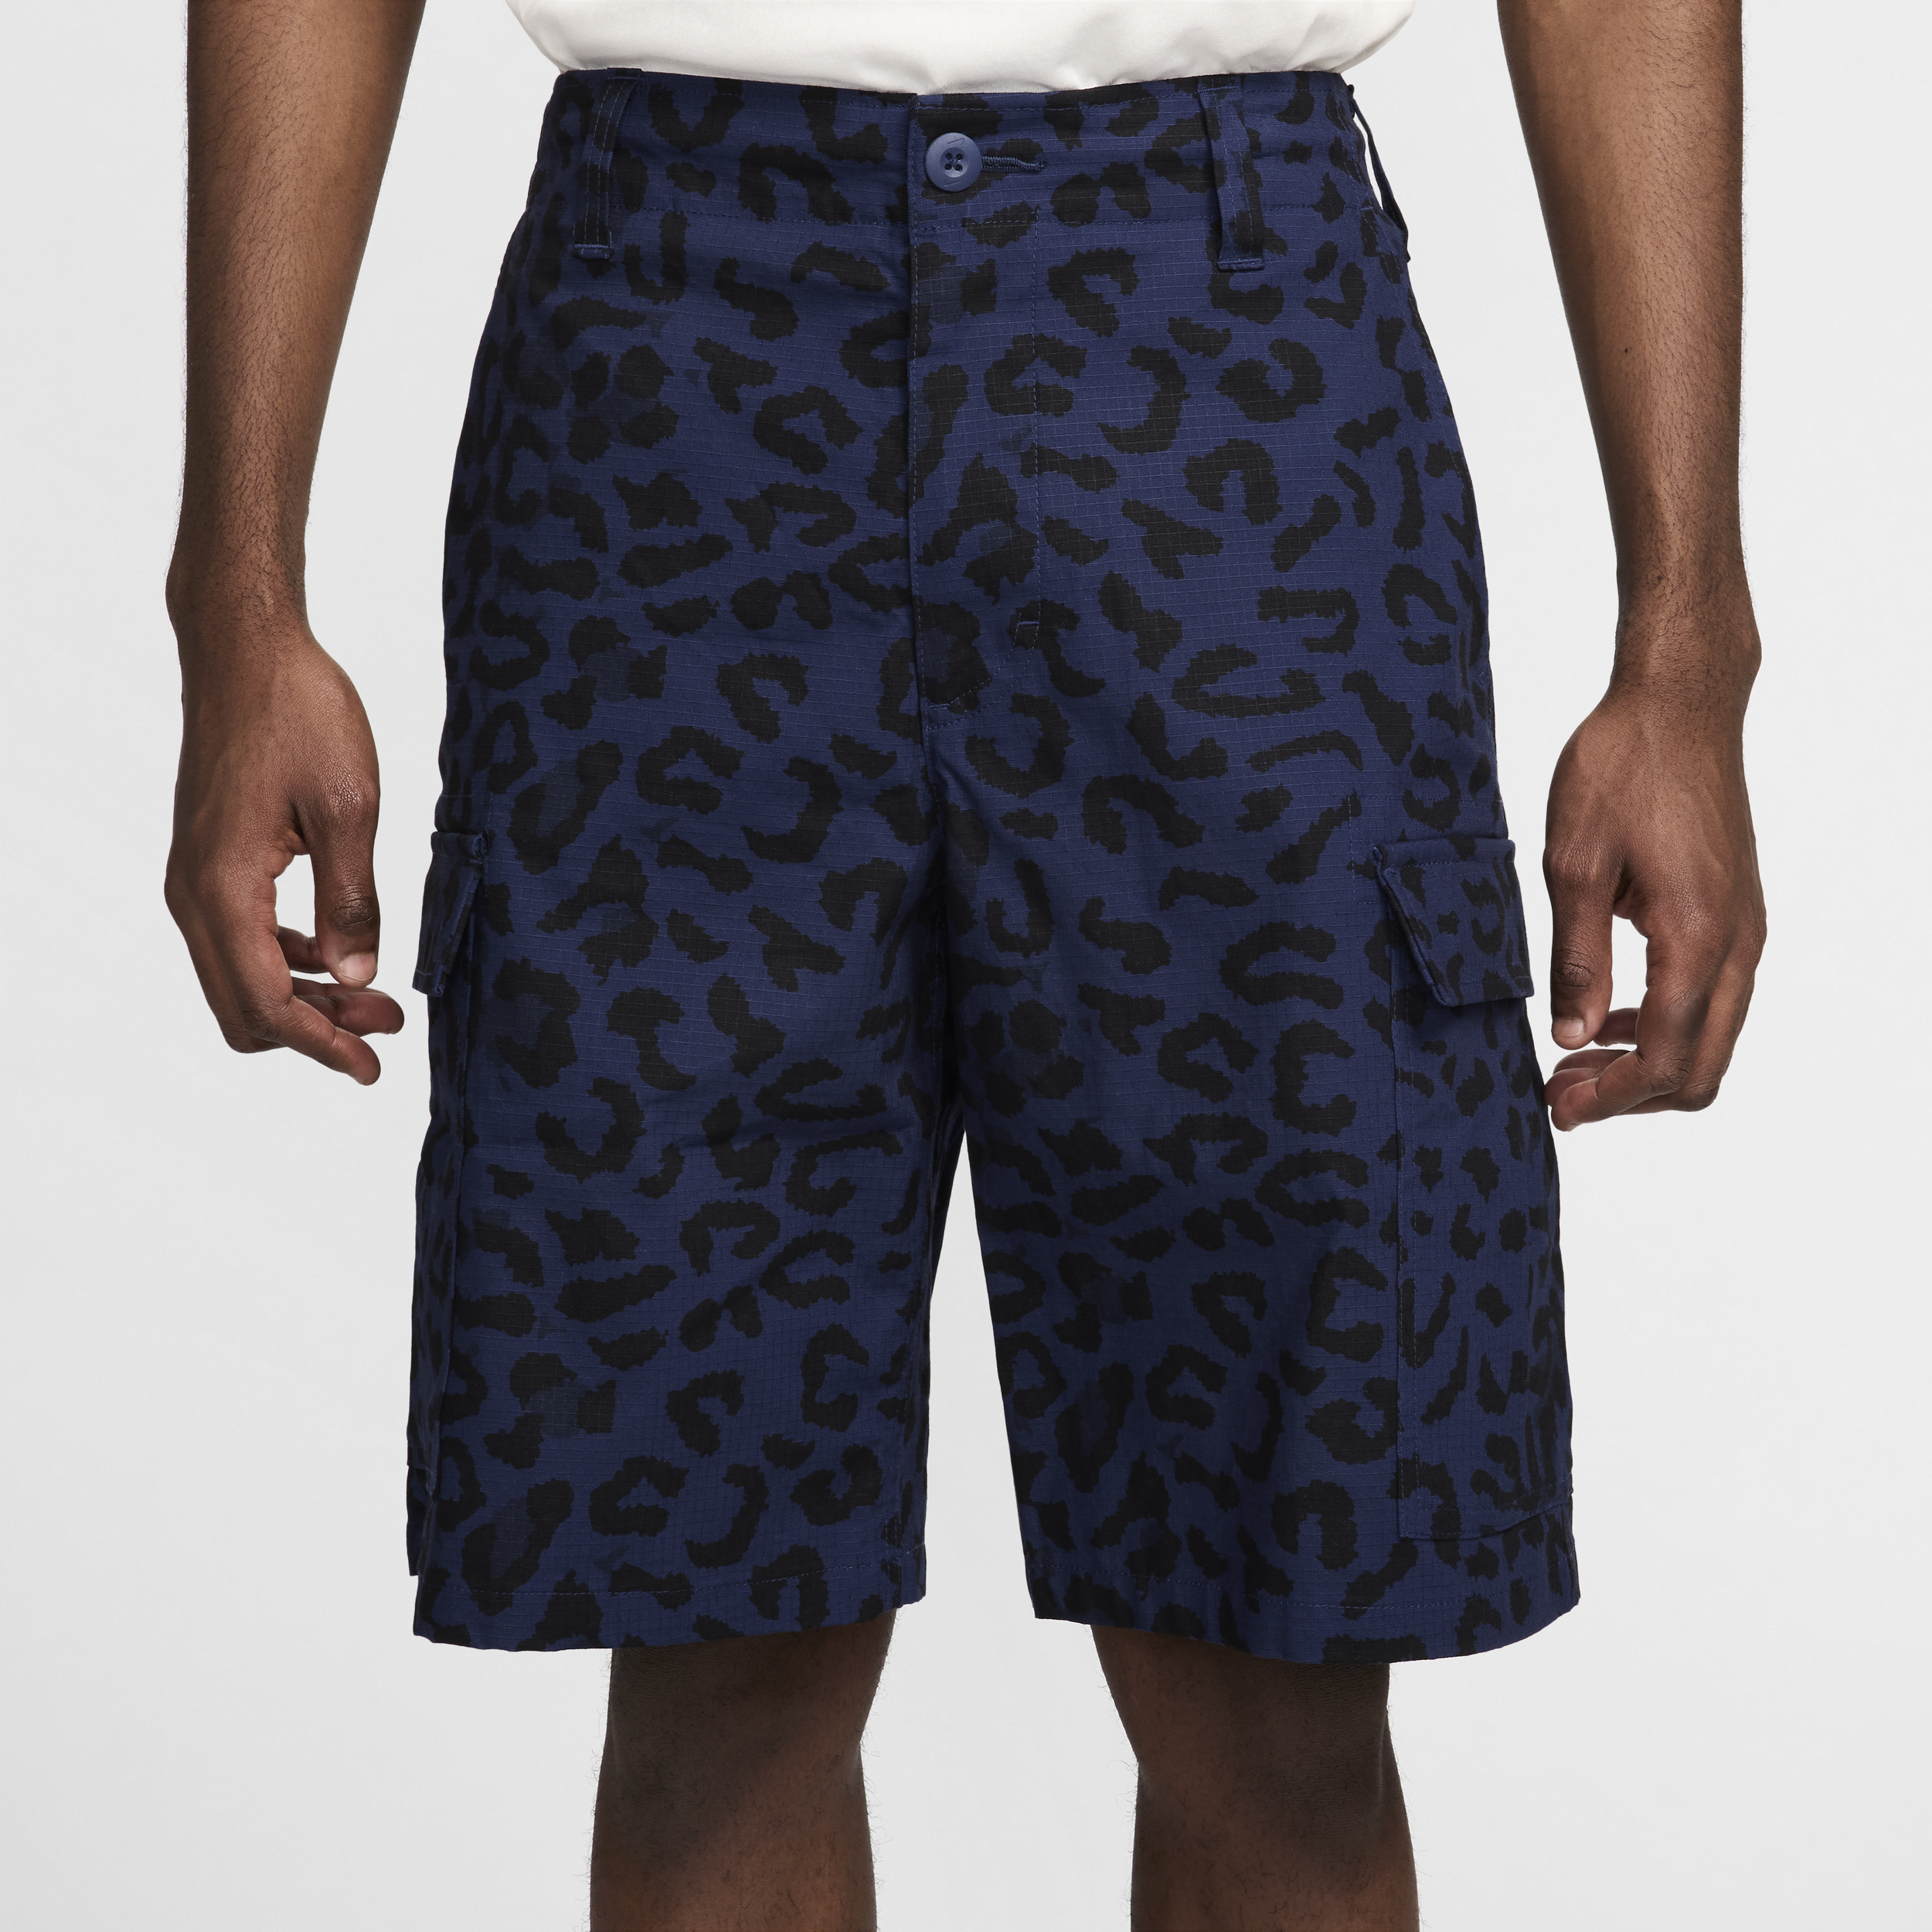 Nike SB Kearny shorts met volledige print voor heren Blauw